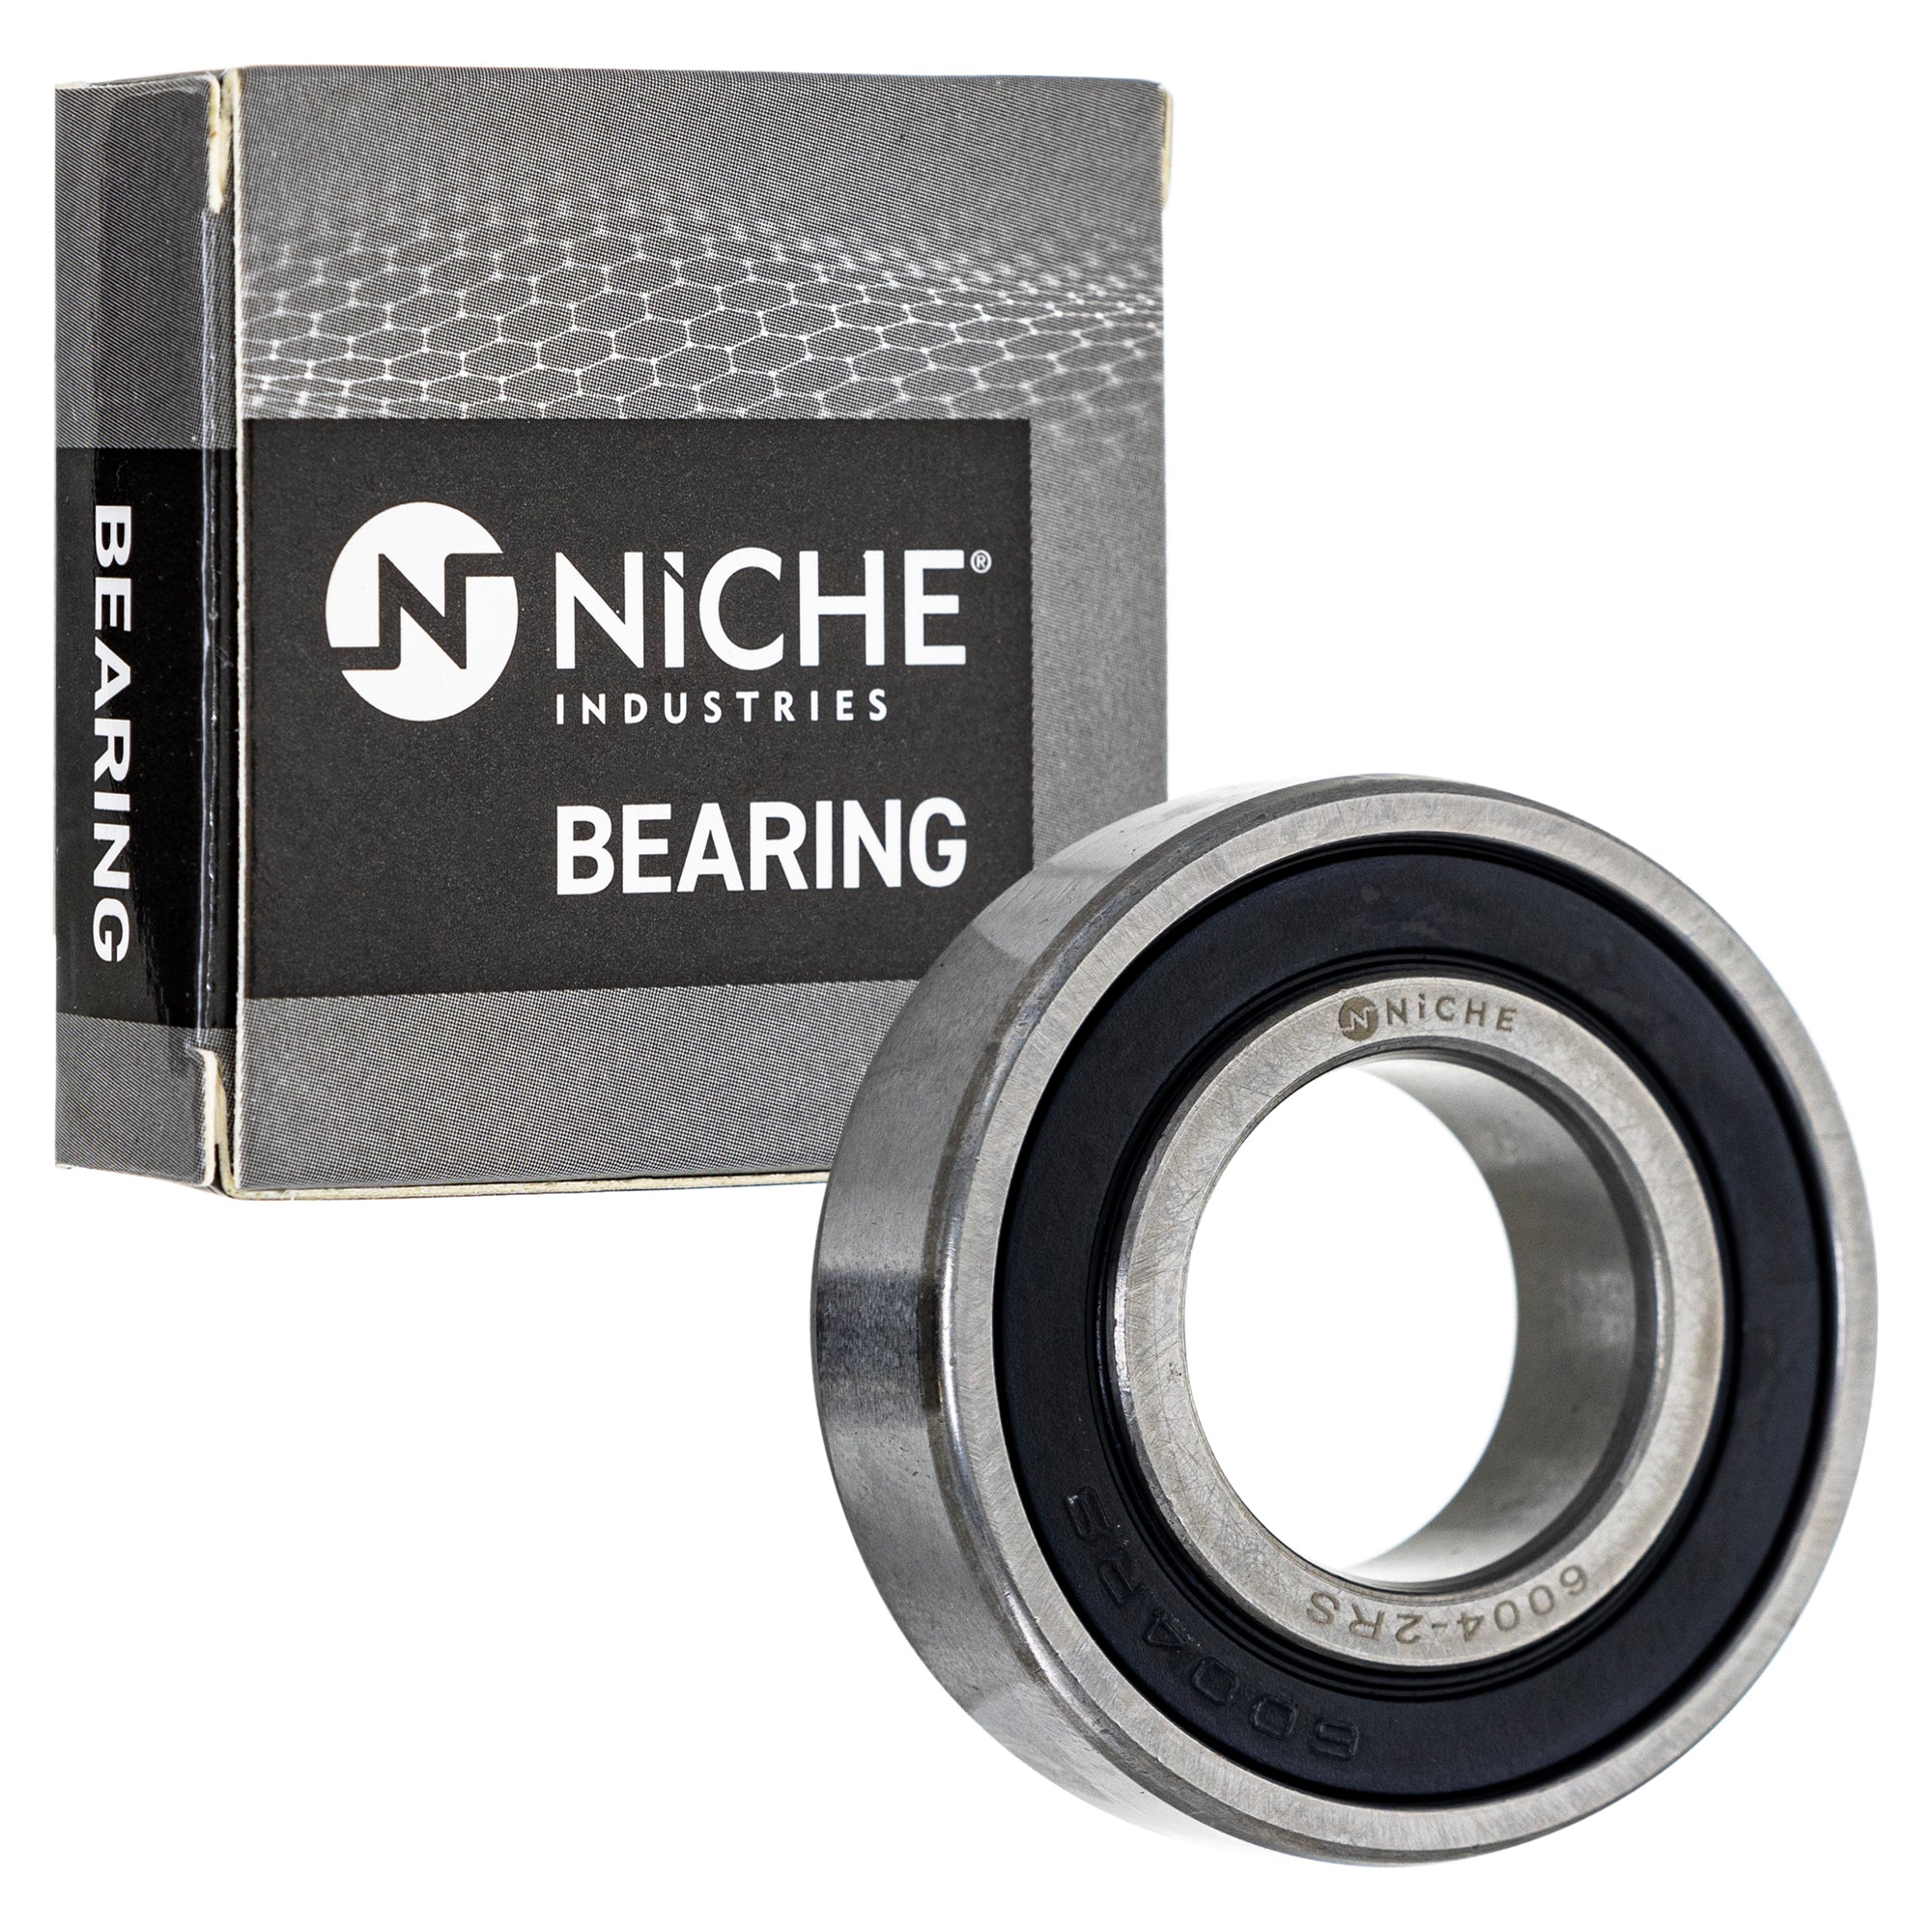 NICHE 519-CBB2225R Bearing 10-Pack for zOTHER Toro Exmark Polaris